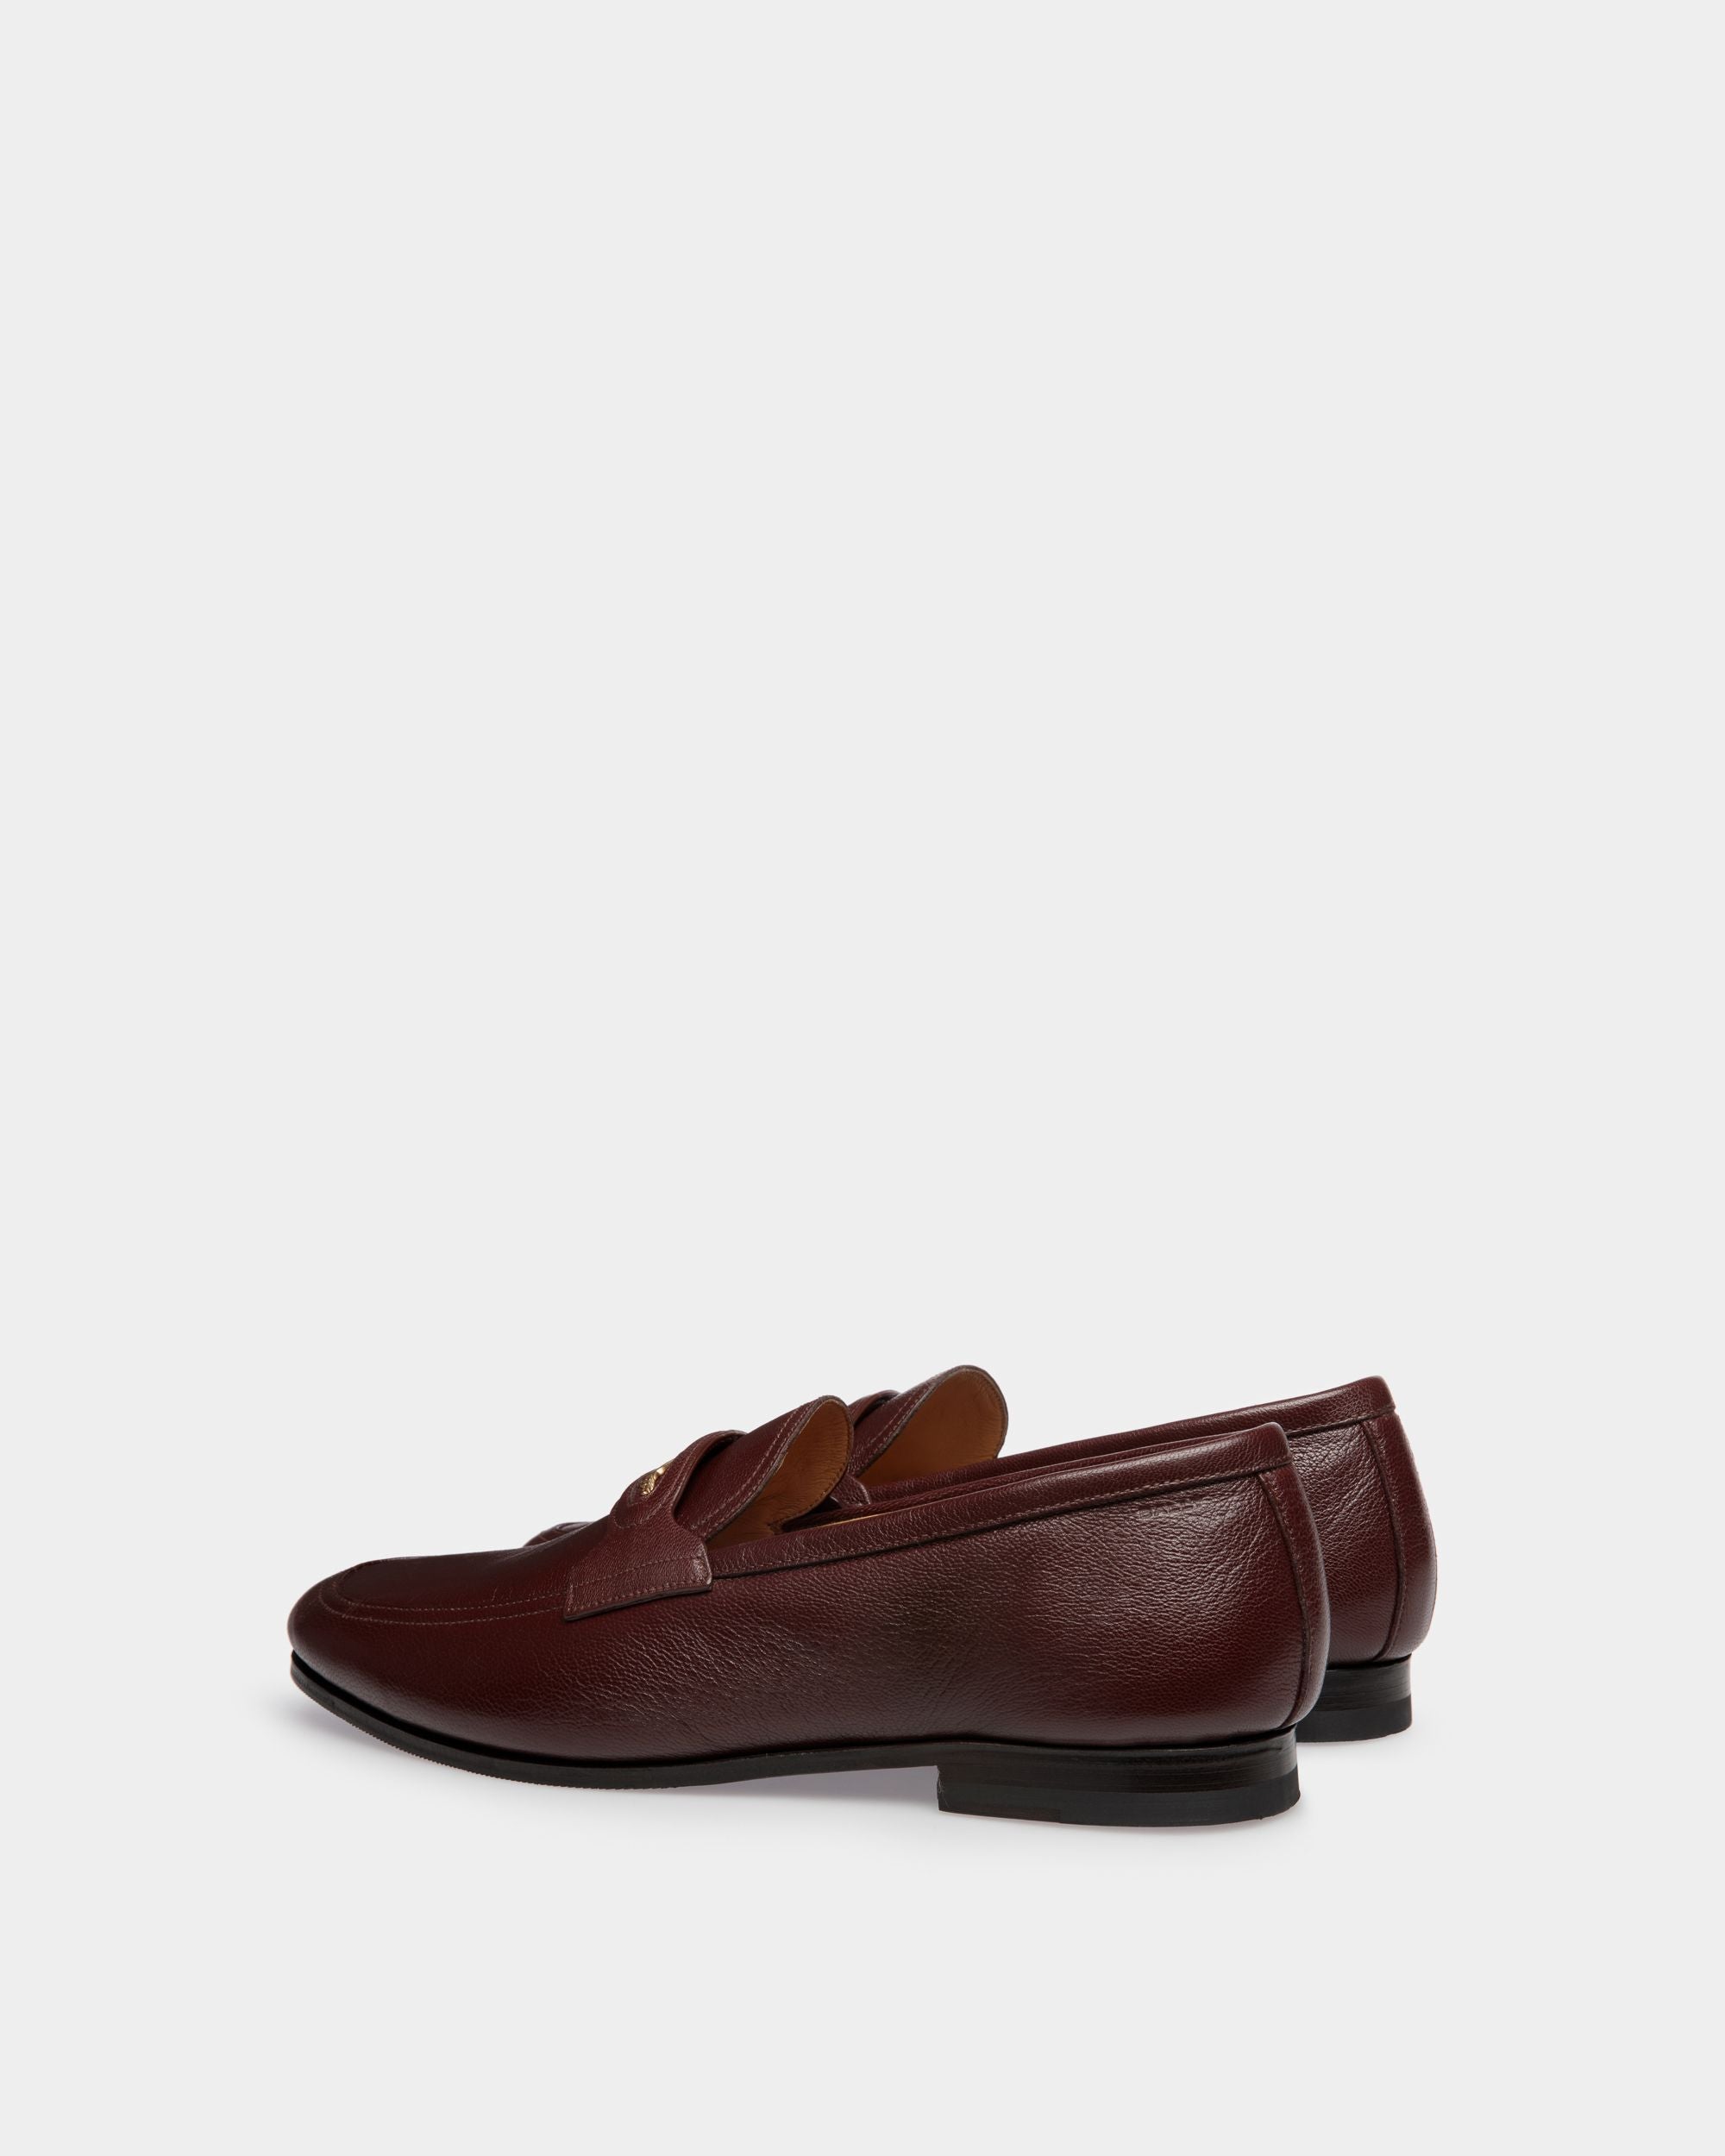 Plume | Men's Loafer in Chestnut Brown Grained Leather | Bally | Still Life 3/4 Back